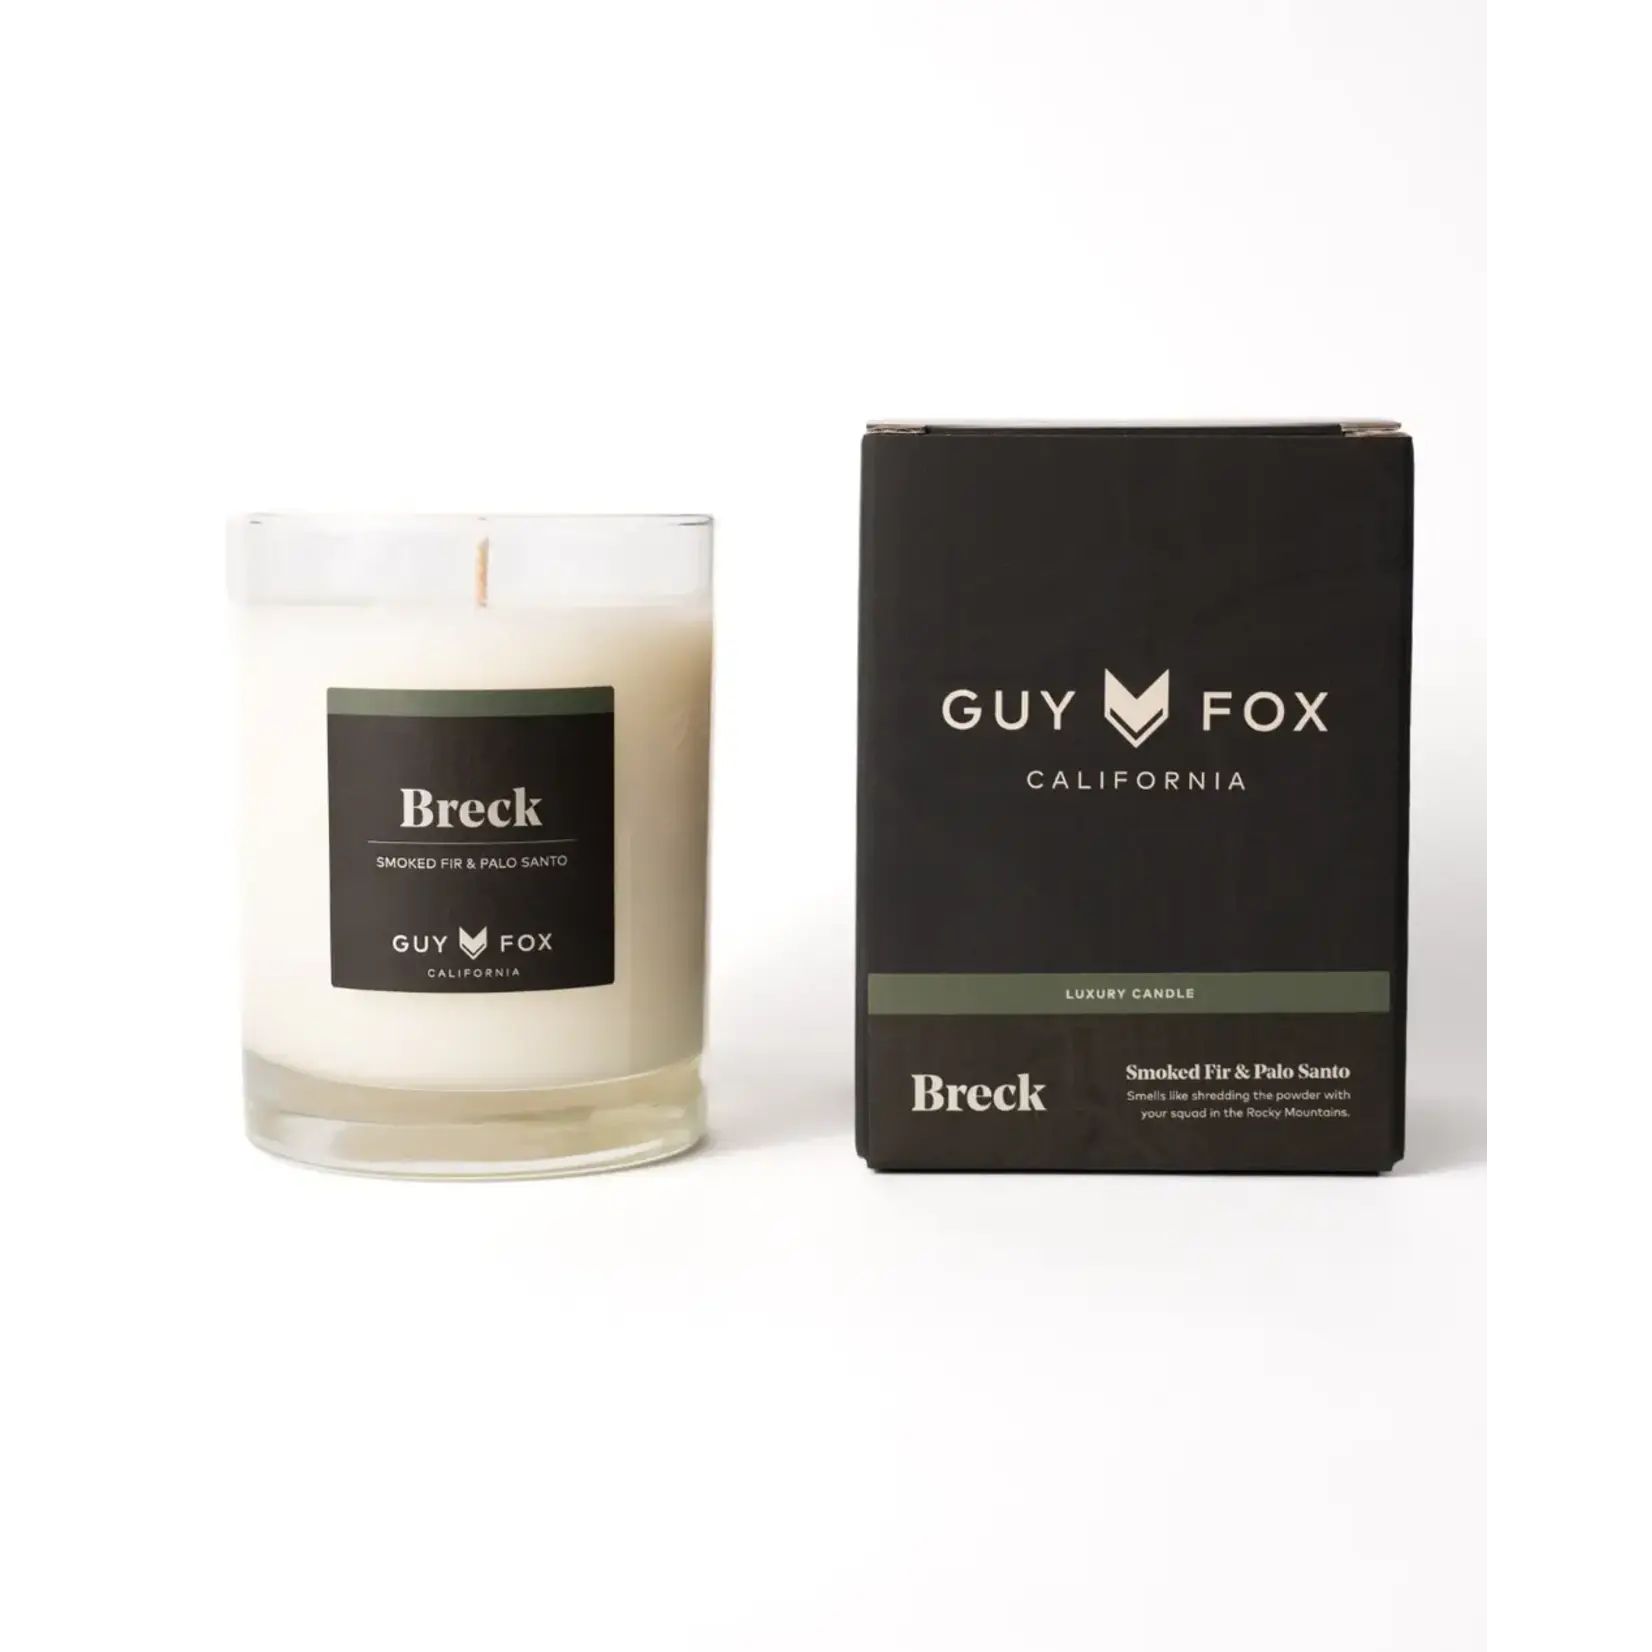 Guy Fox Breck Coconut Wax Candle - Smoked Fir + Palo Santo